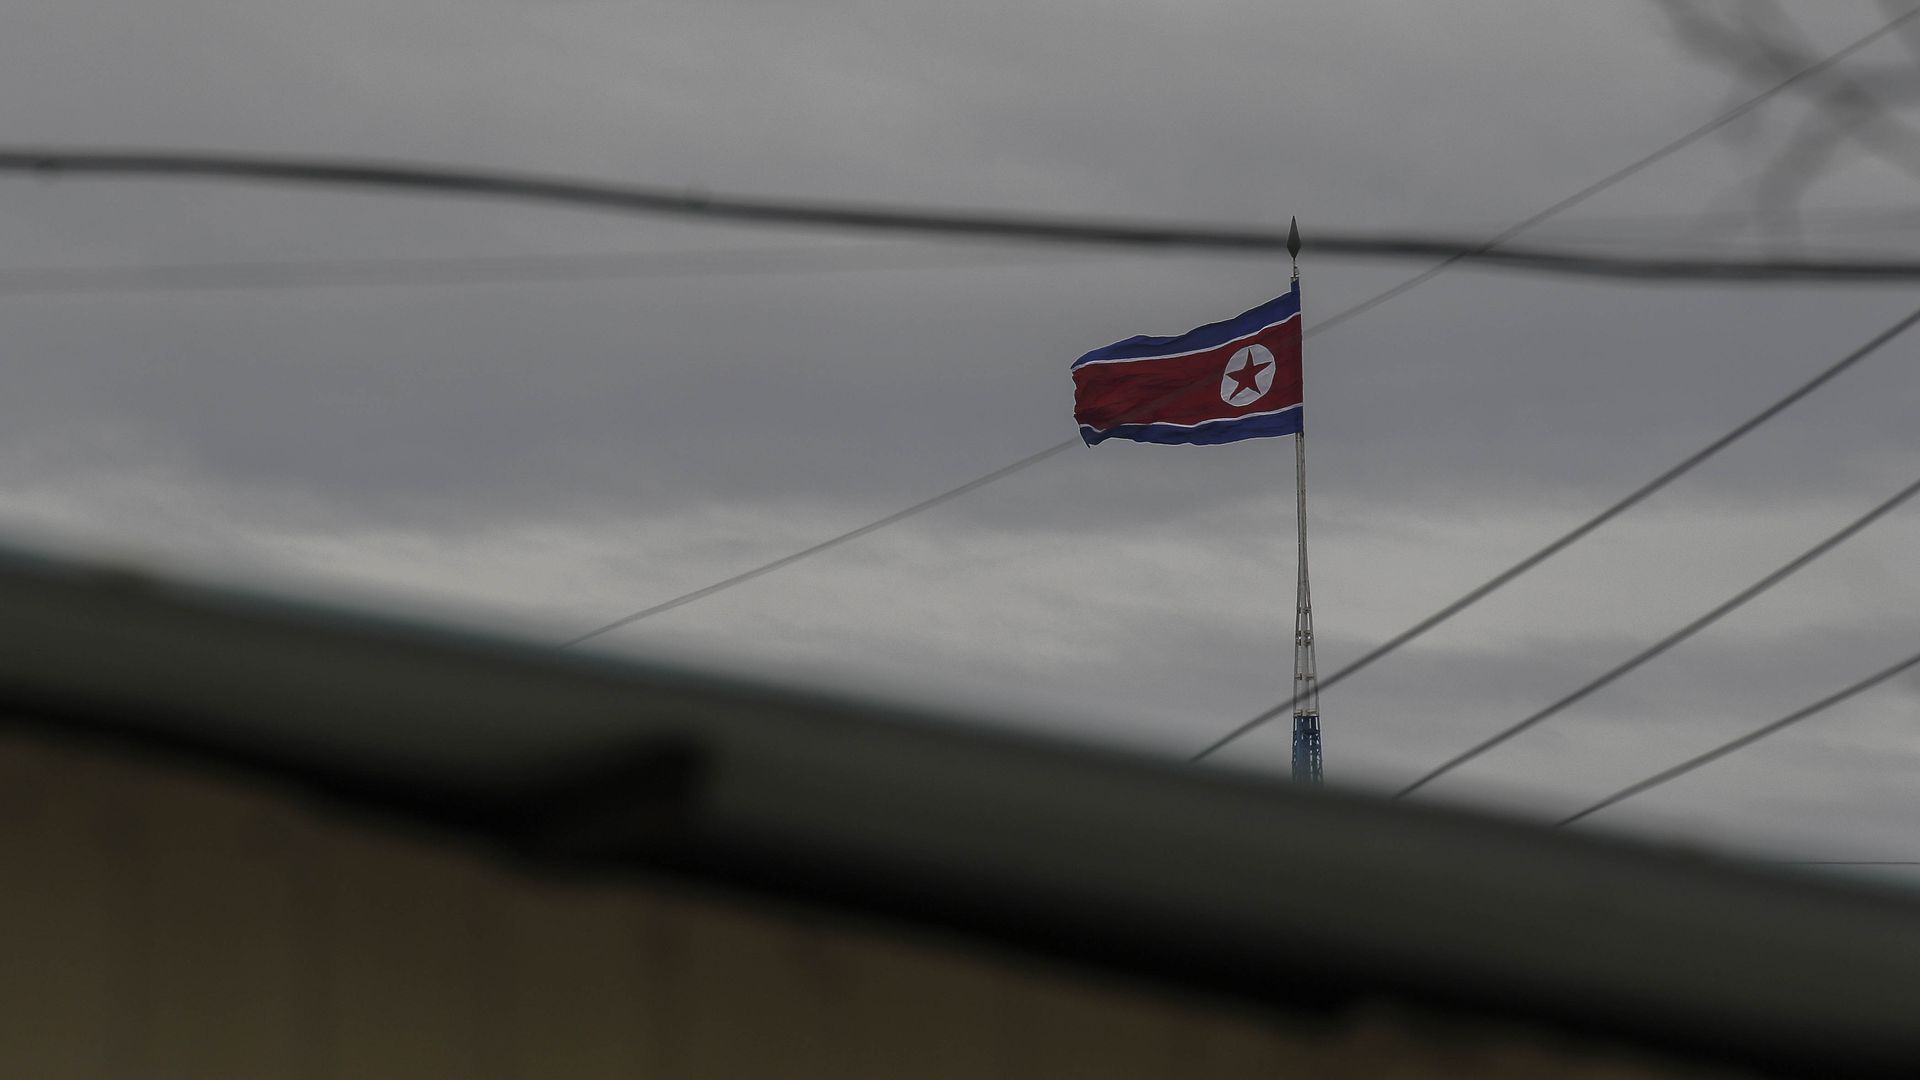 The North Korean flag